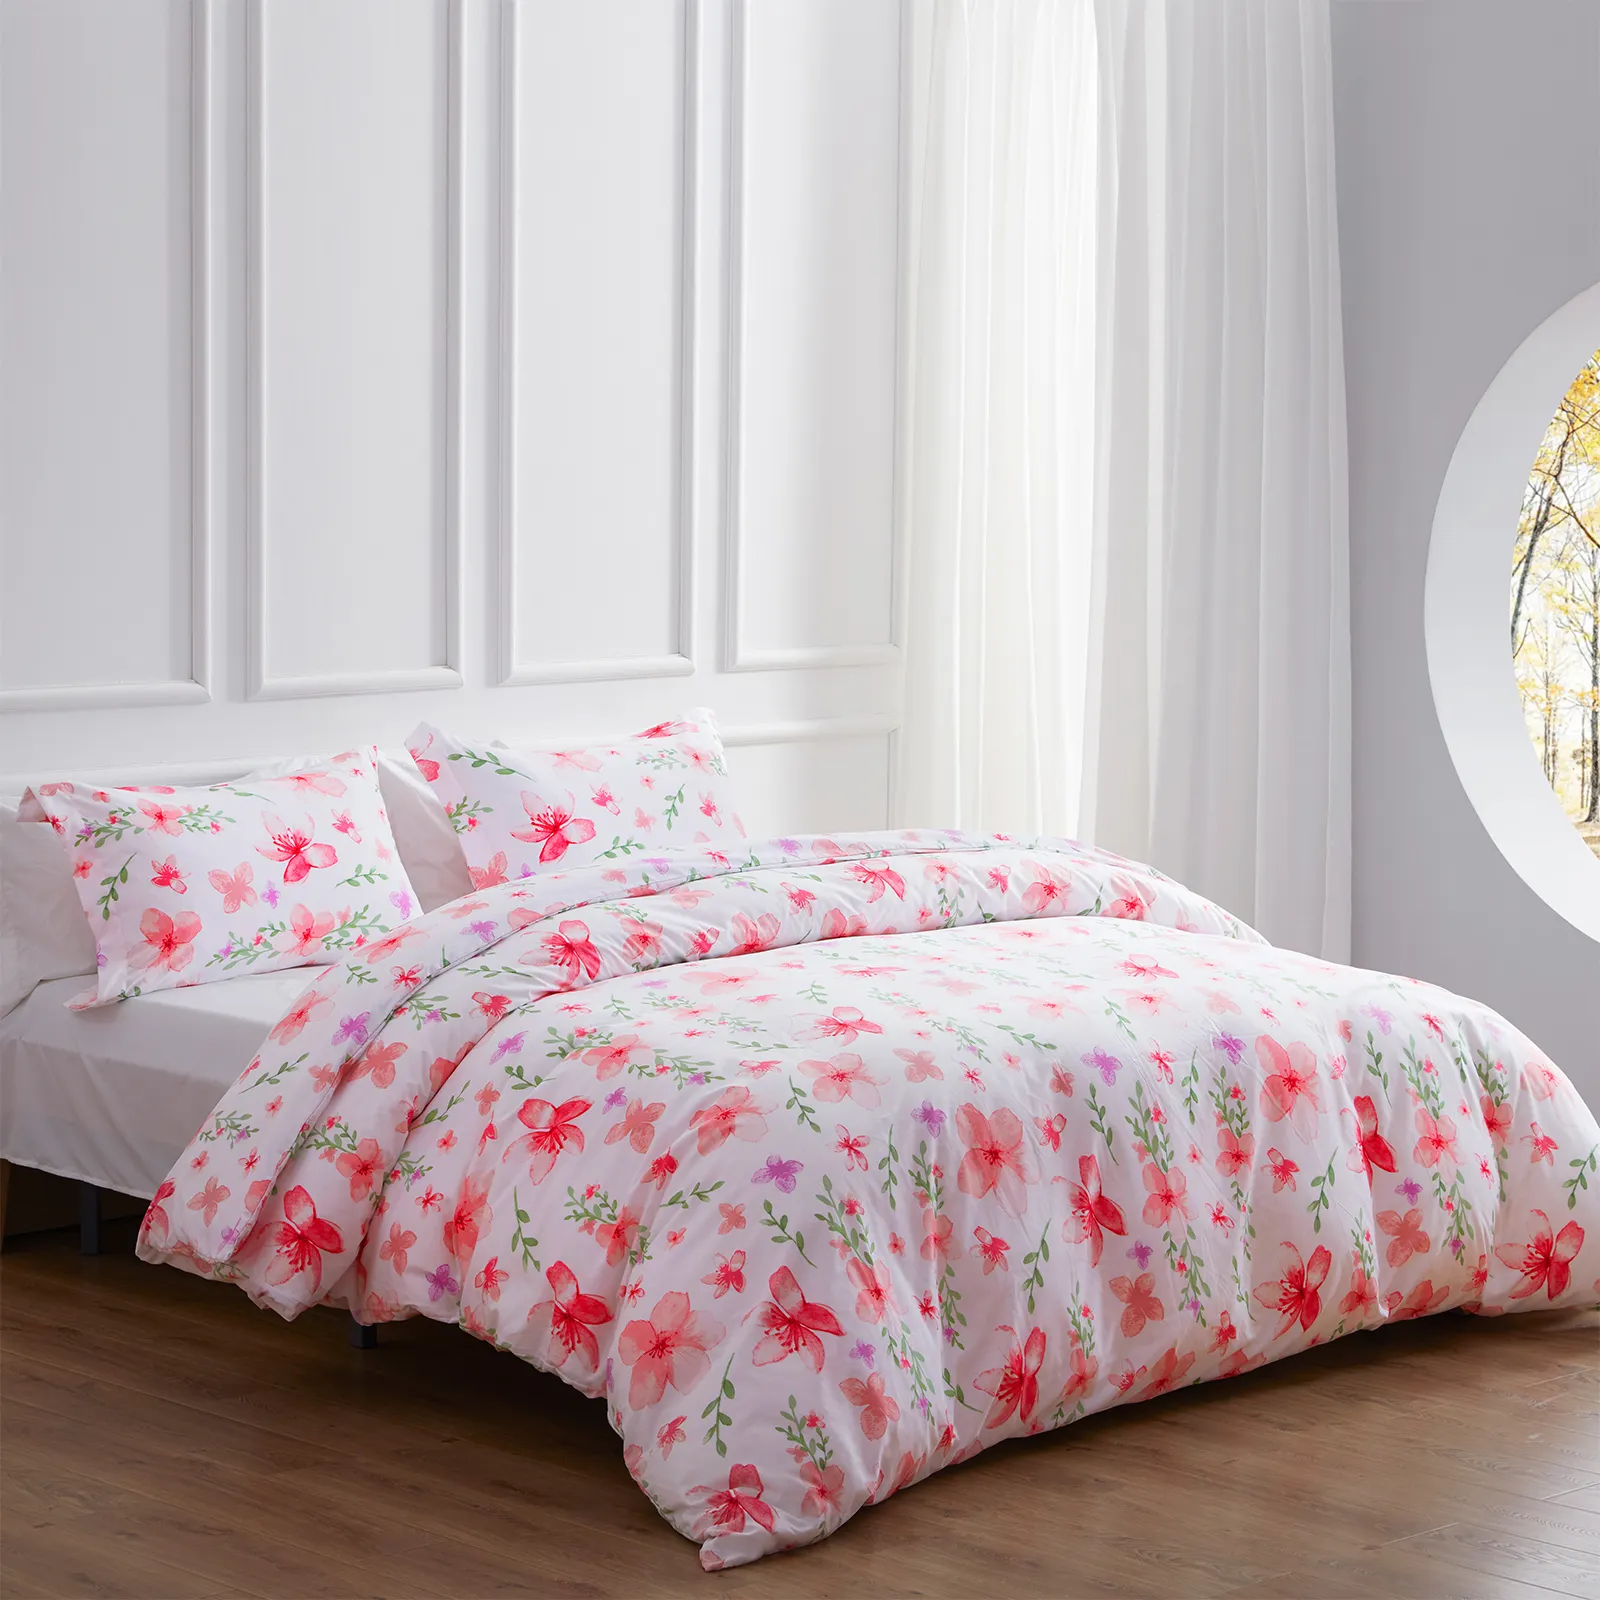 Yuchun BSCI Manufacturer Supply Bedding Set Bedroom Quilt Cover Fashion Printed Floral Duvet Cover Set